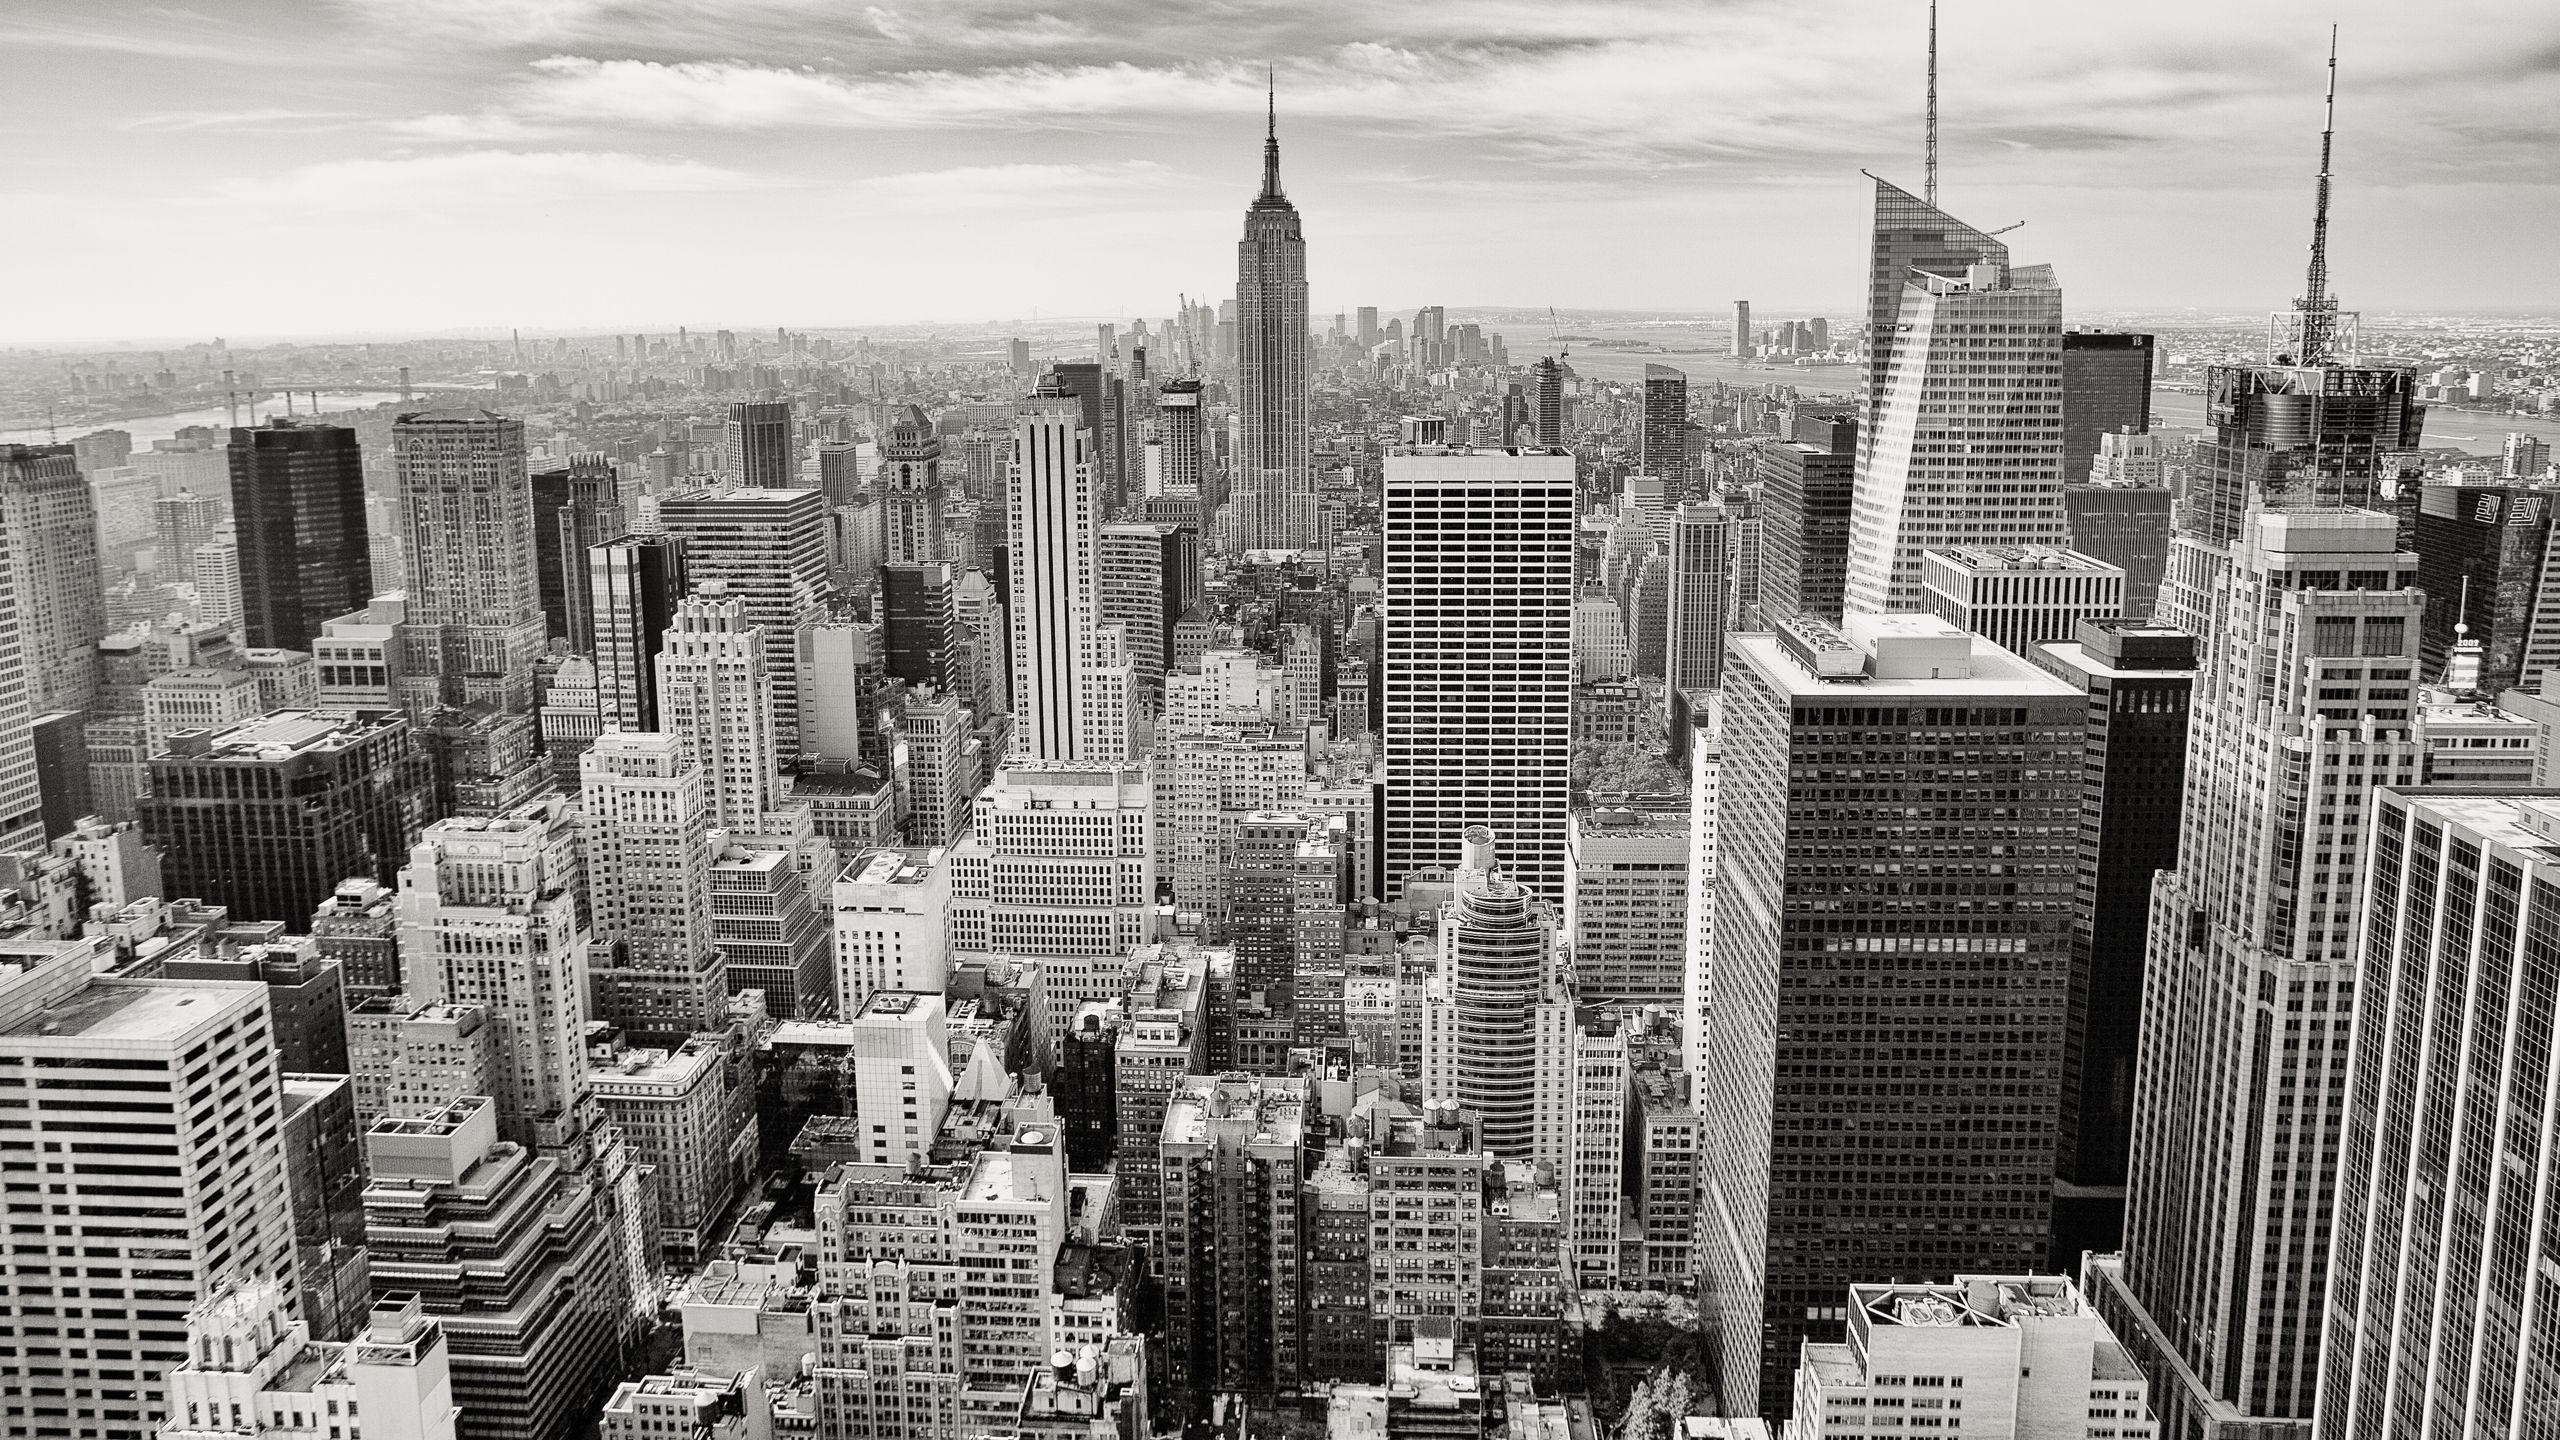 New York City Wallpaper · Pexels · Free Stock Photos